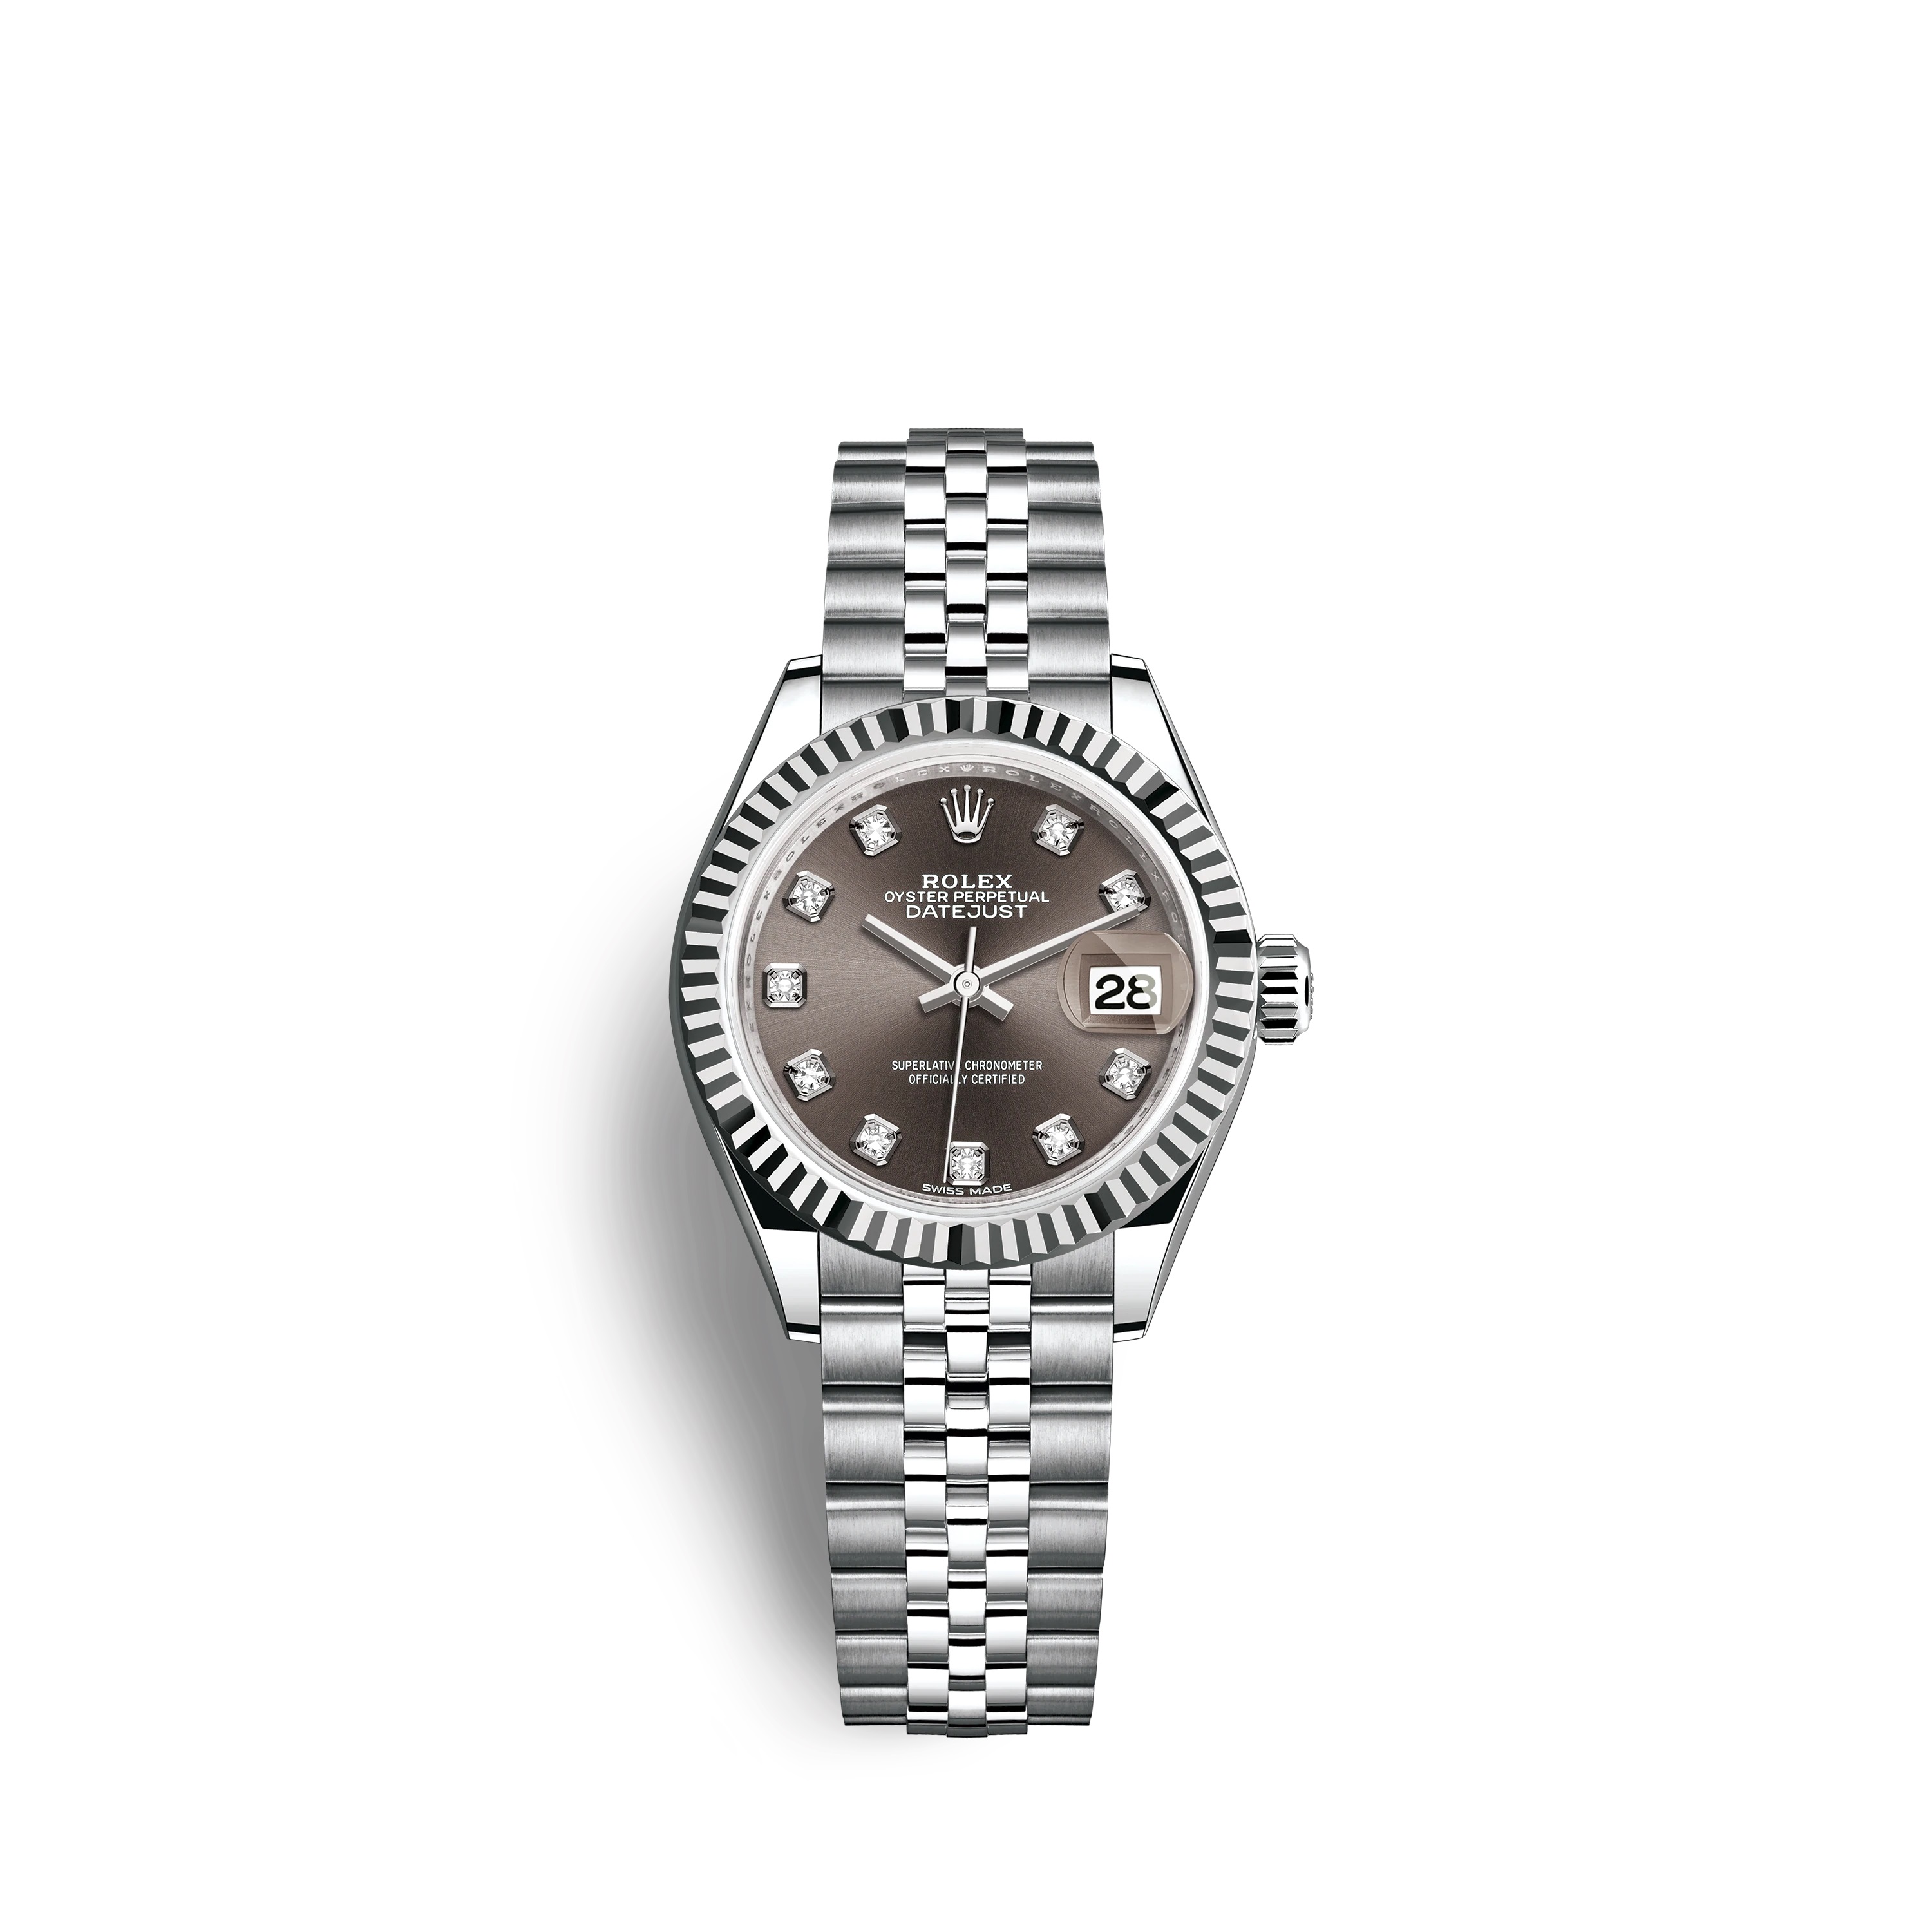 Lady-Datejust 28 279174 White Gold & Stainless Steel Watch (Dark Grey Set with Diamonds)